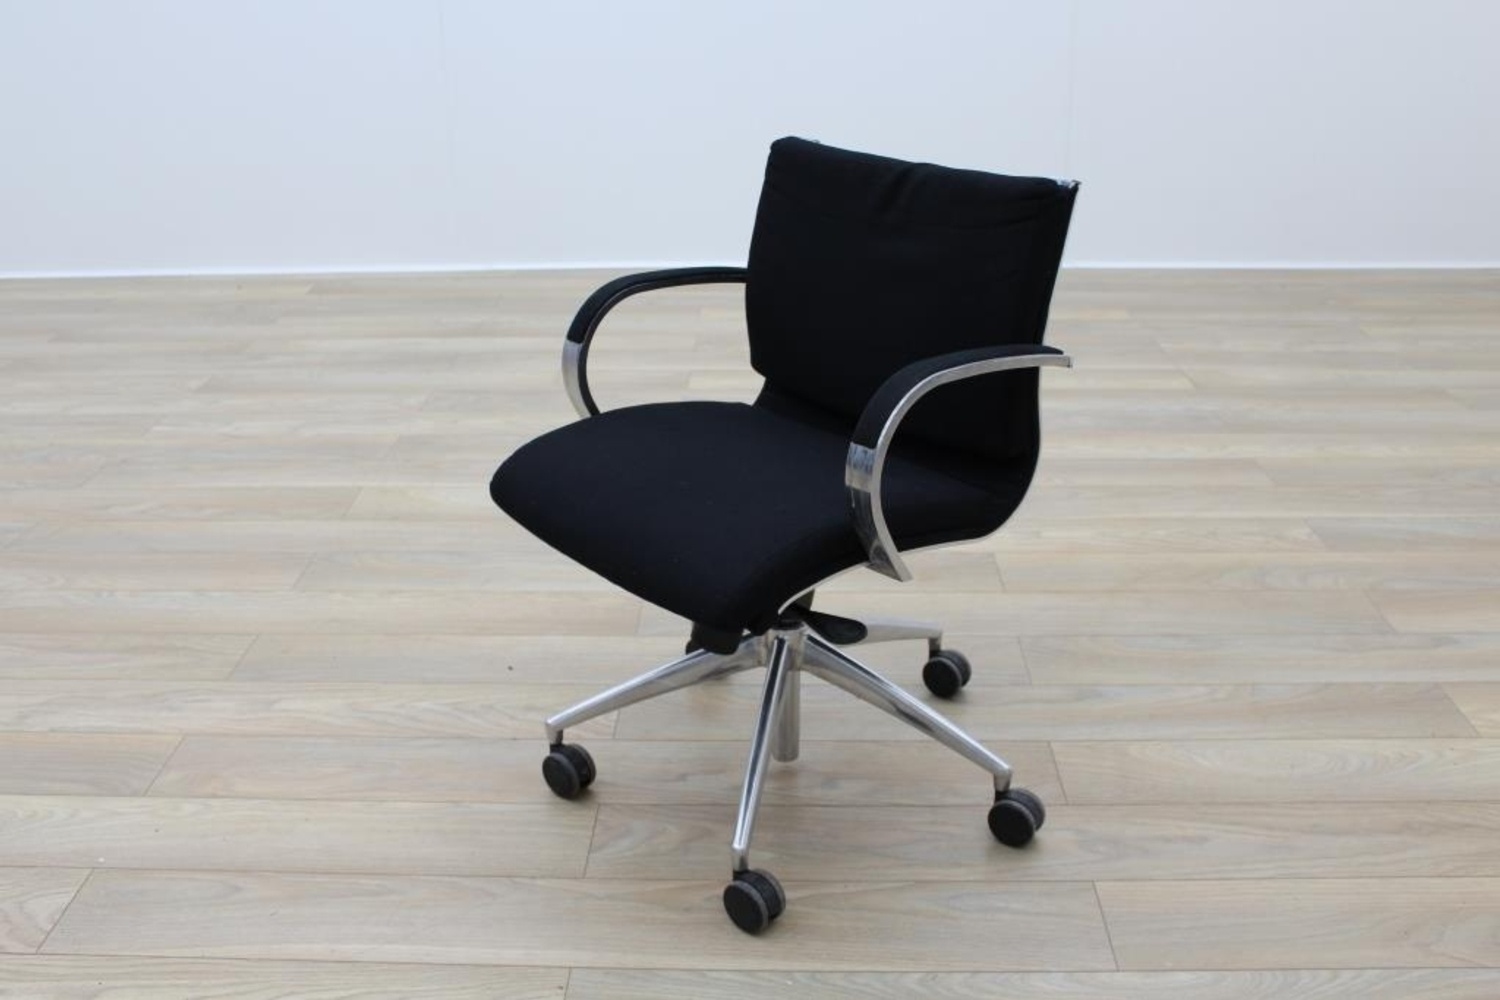 Black used chair with chrome armrest